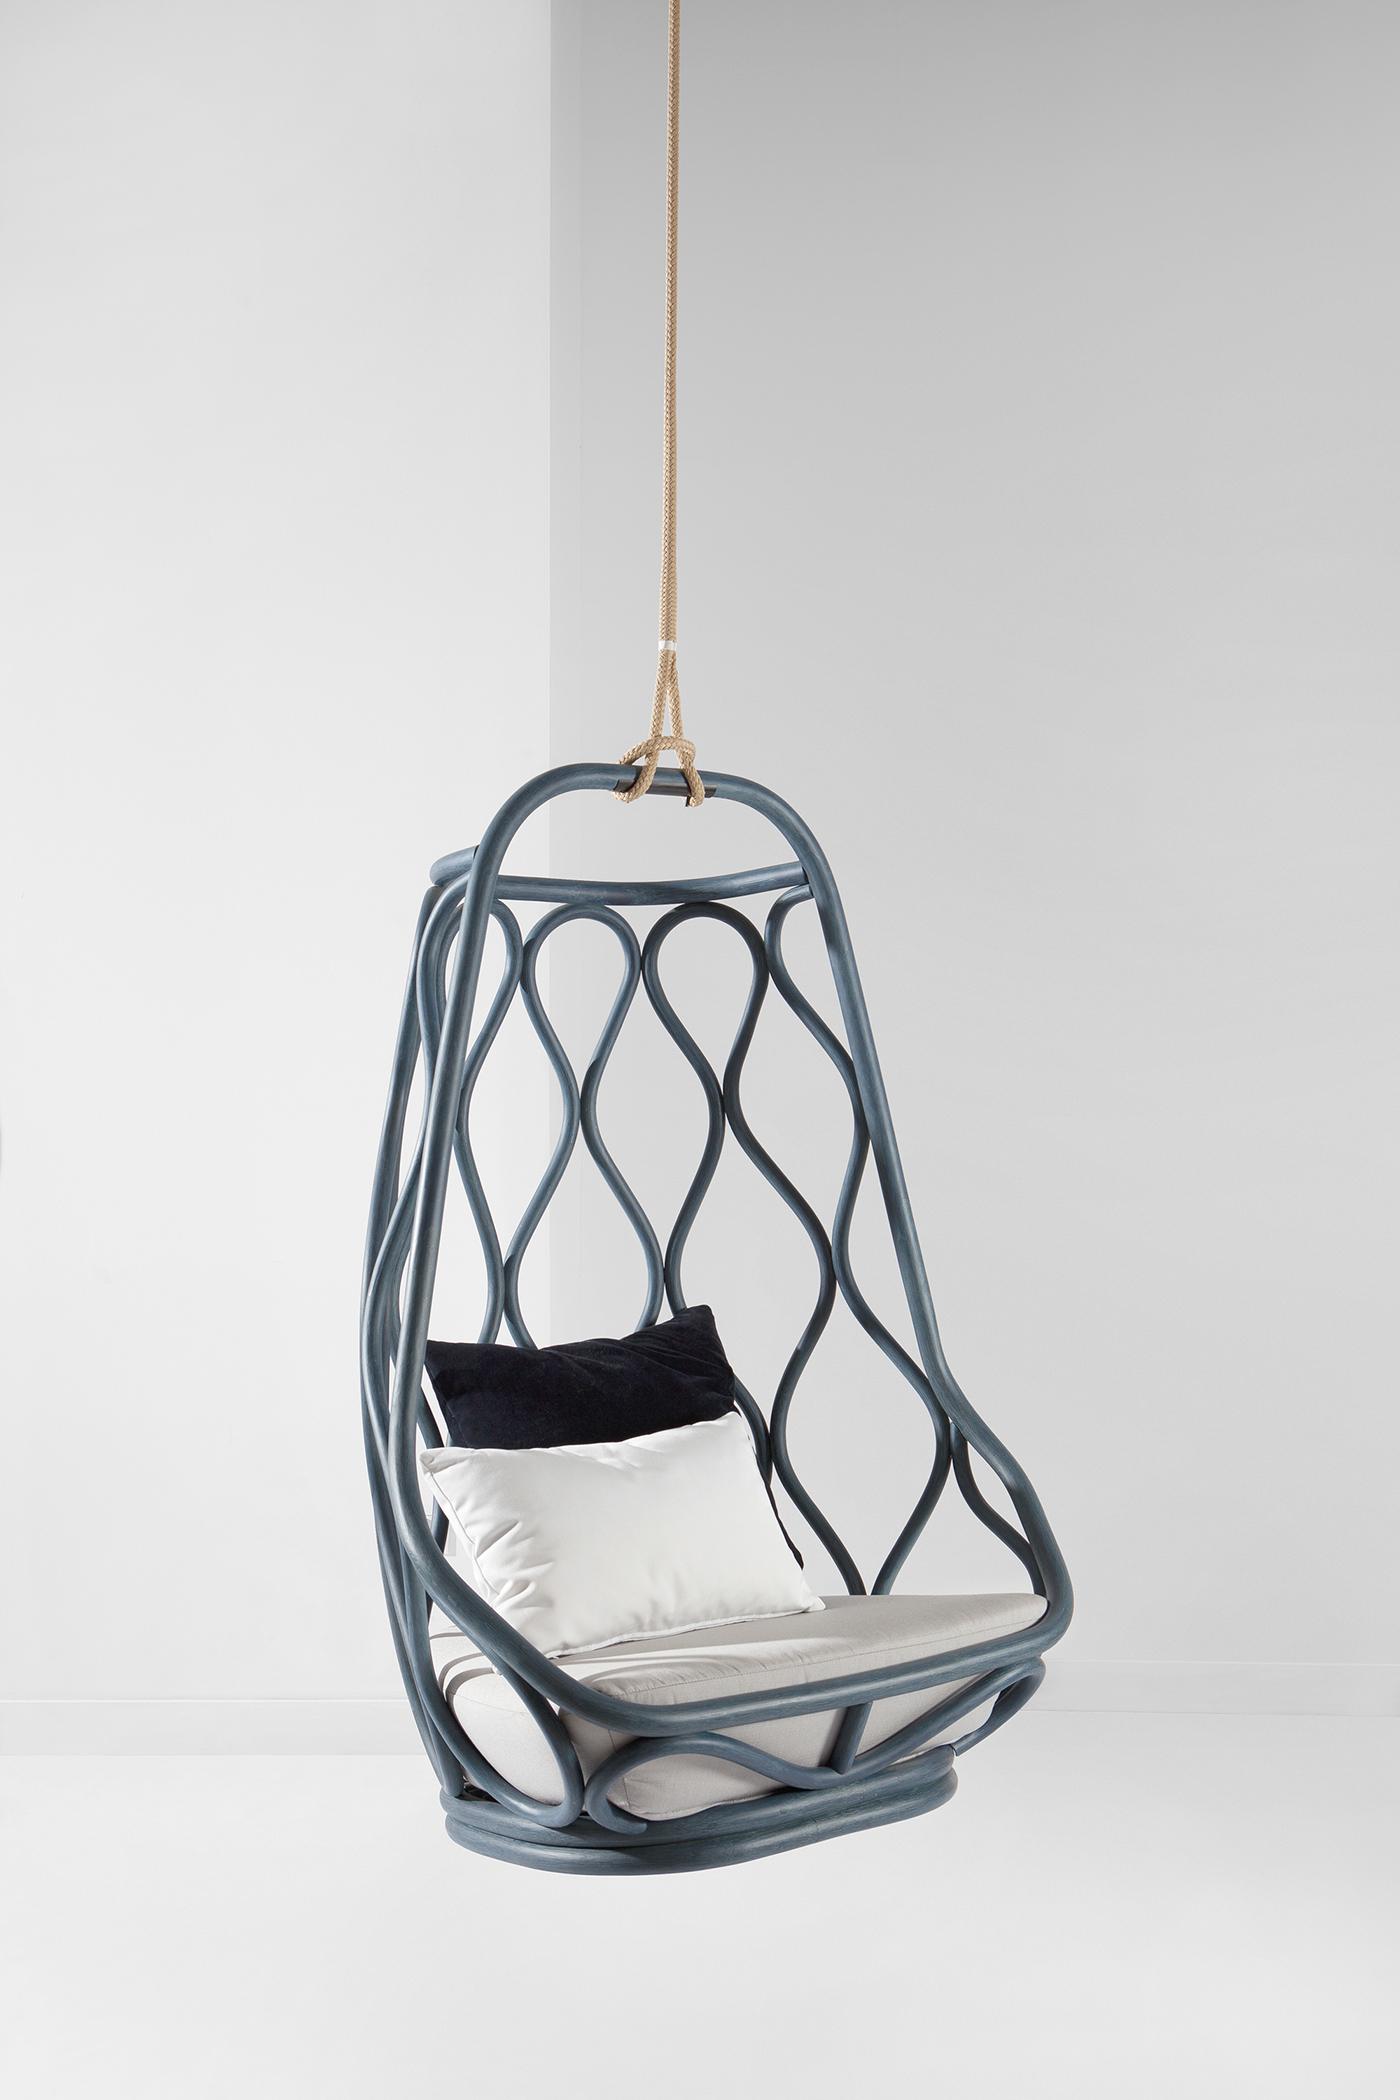 Nautica chair rattan expormim mutdesign mut albertosanchez design hangingchair